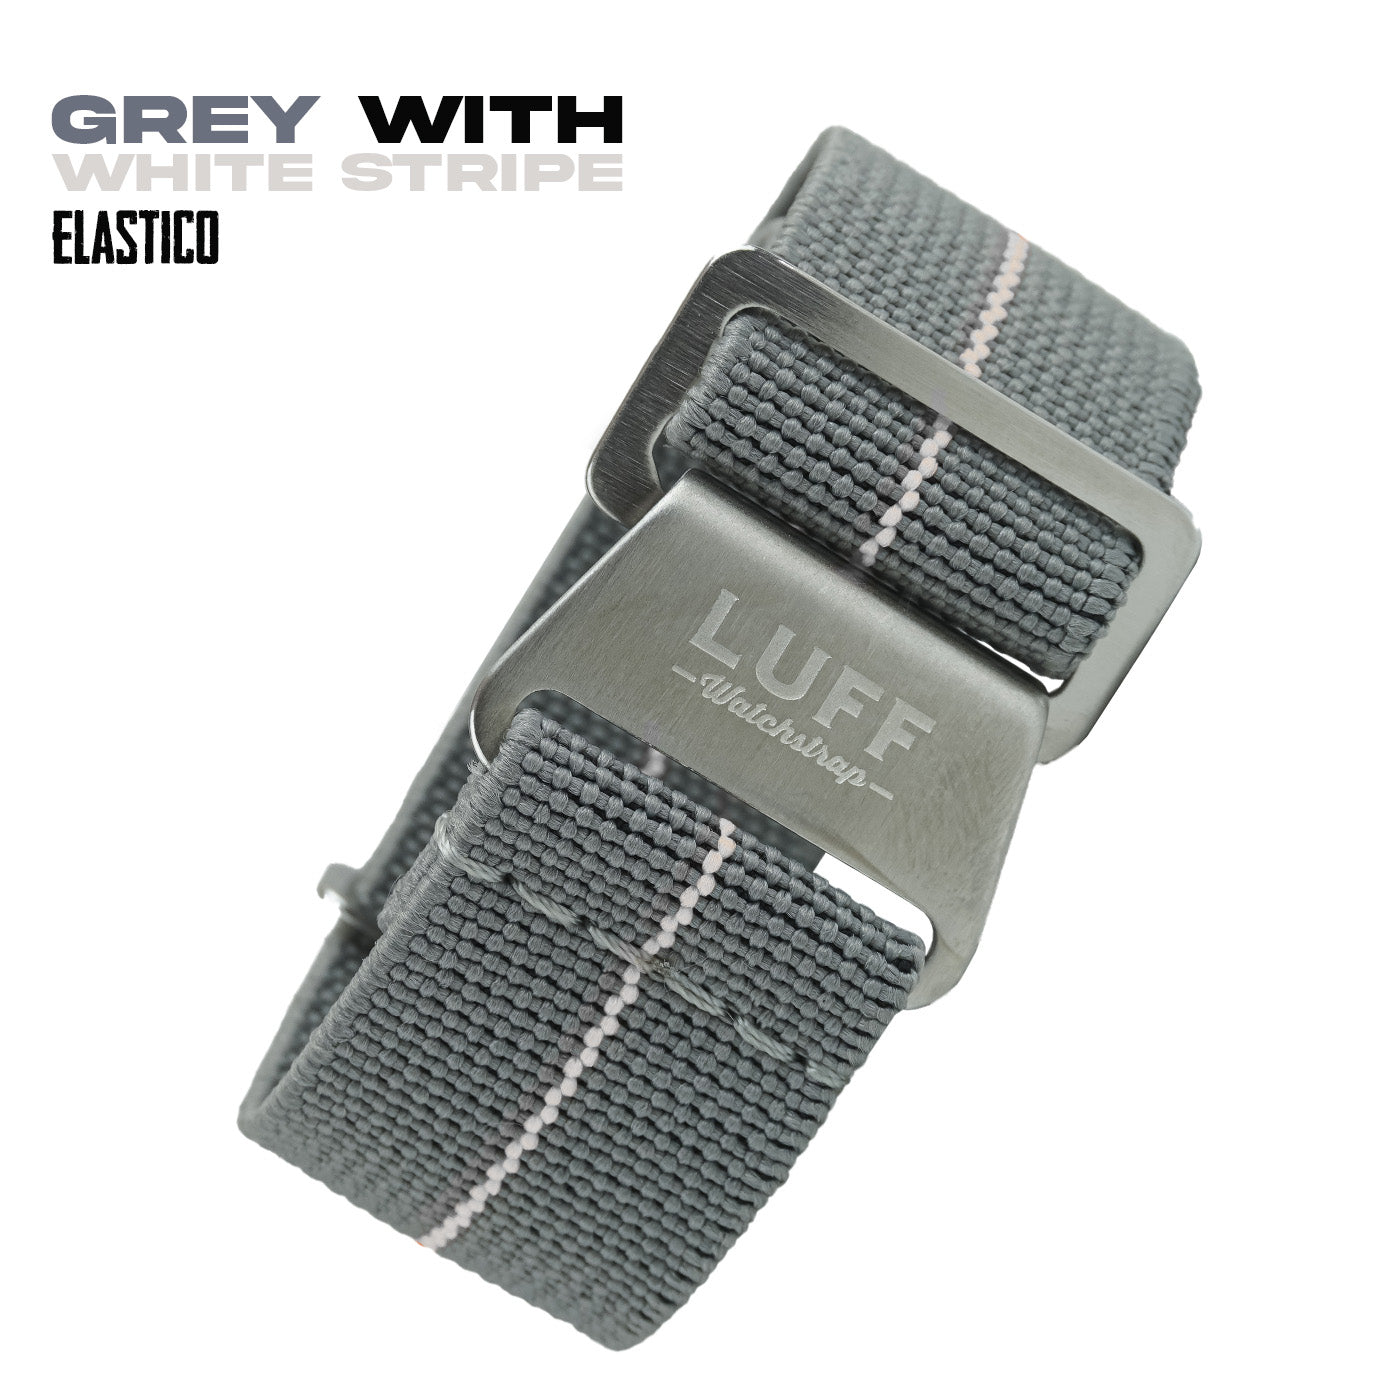 Grey with White Stripe (6903641505879)